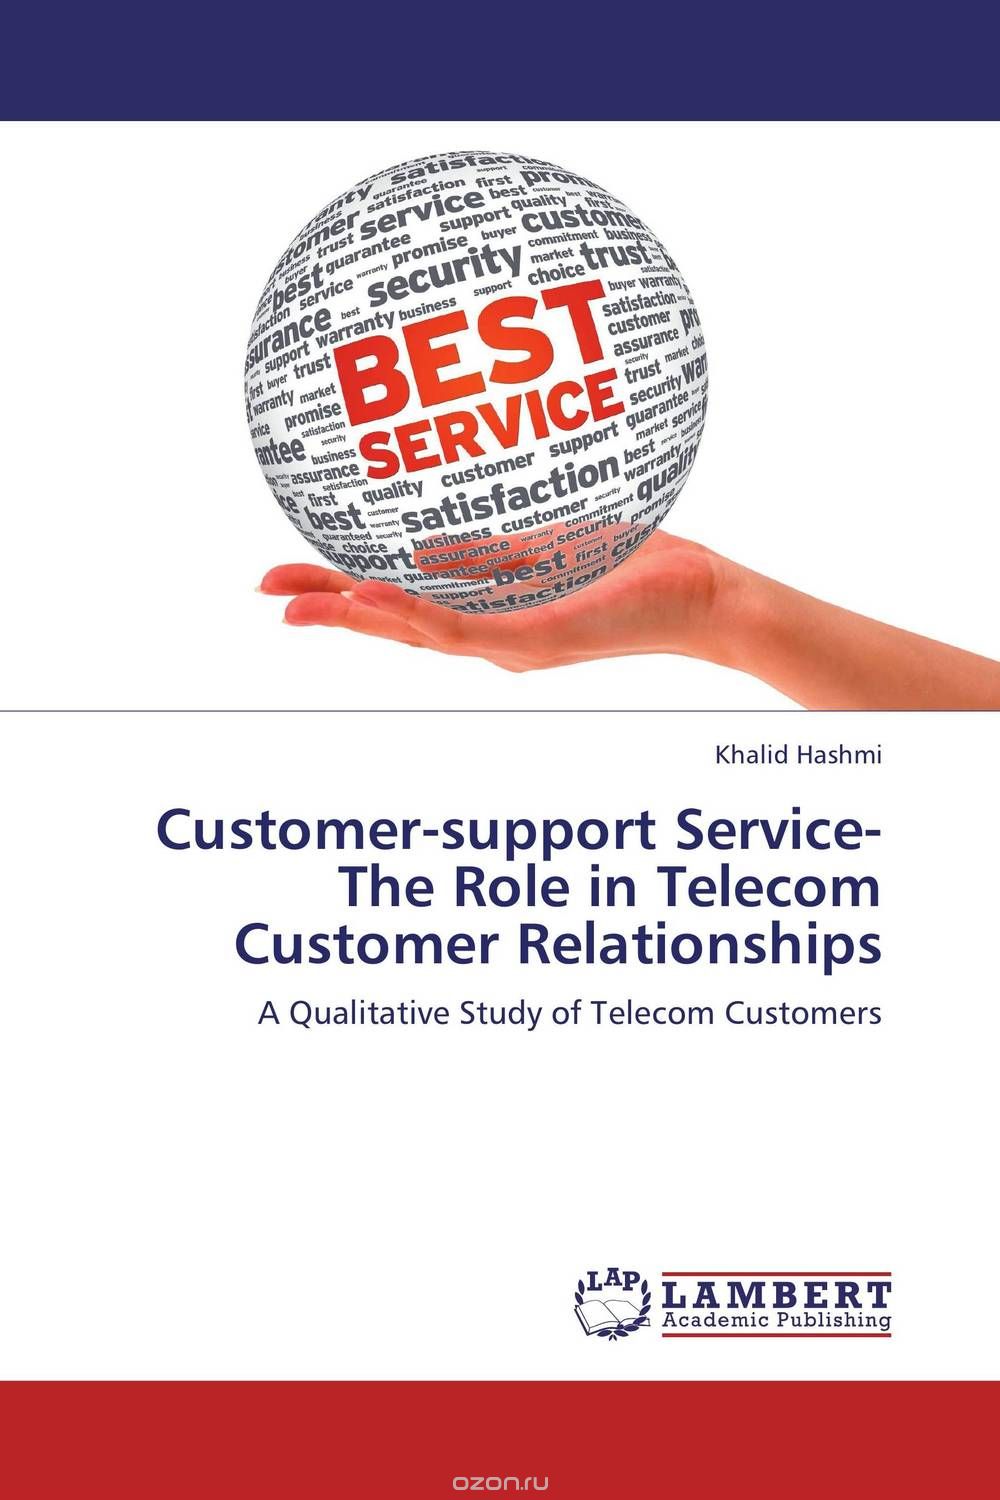 Скачать книгу "Customer-support Service-The Role in Telecom Customer Relationships"